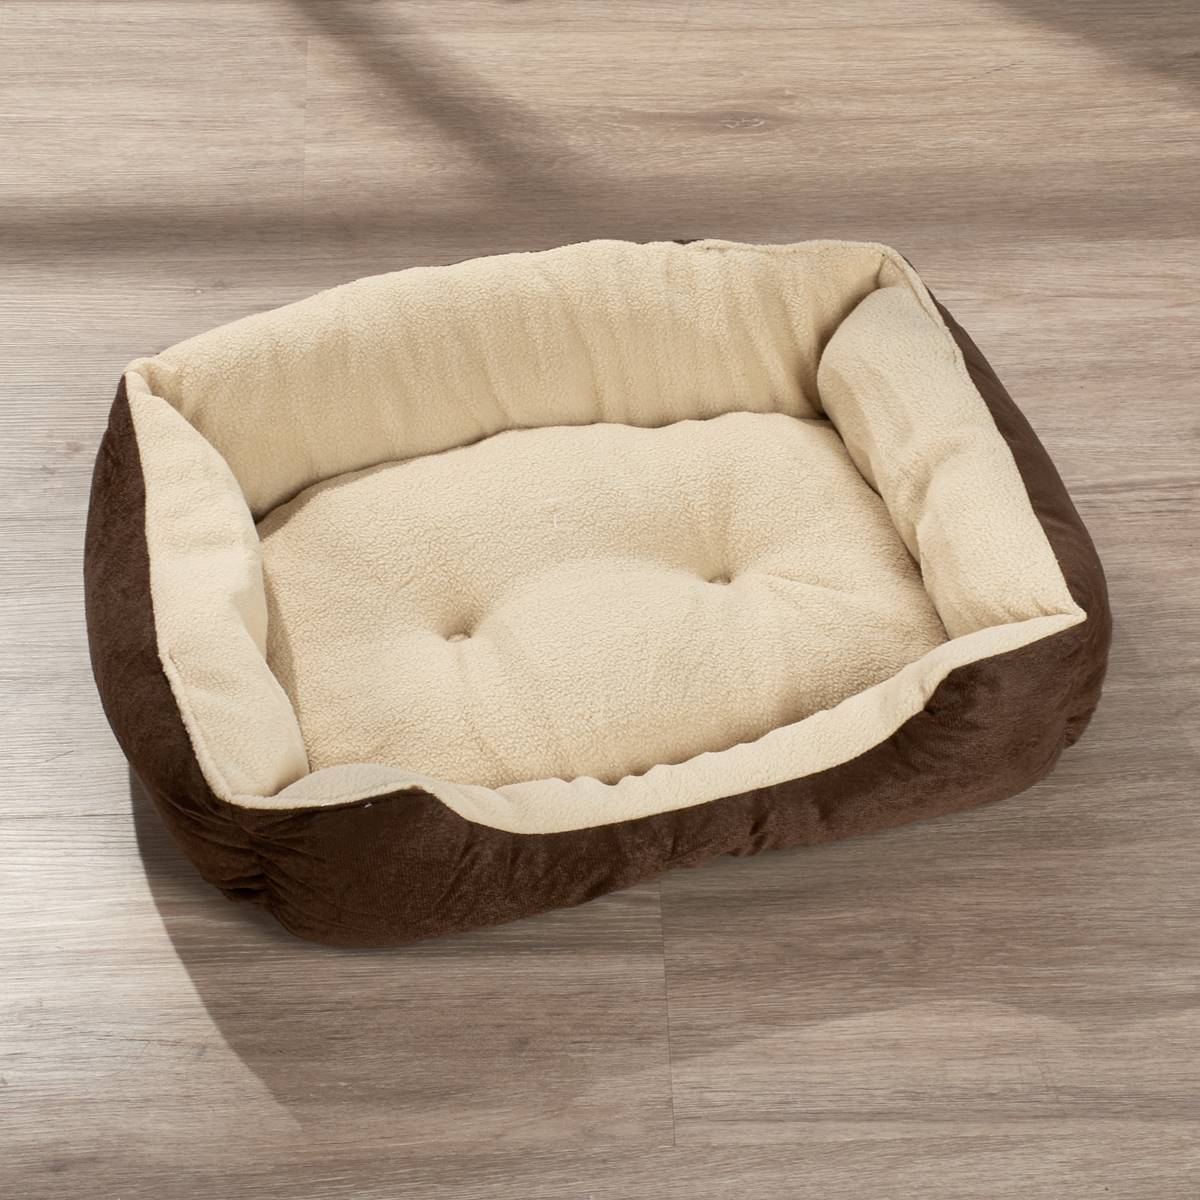 Comfortable Pet Plush Square Cuddler Pet Bed